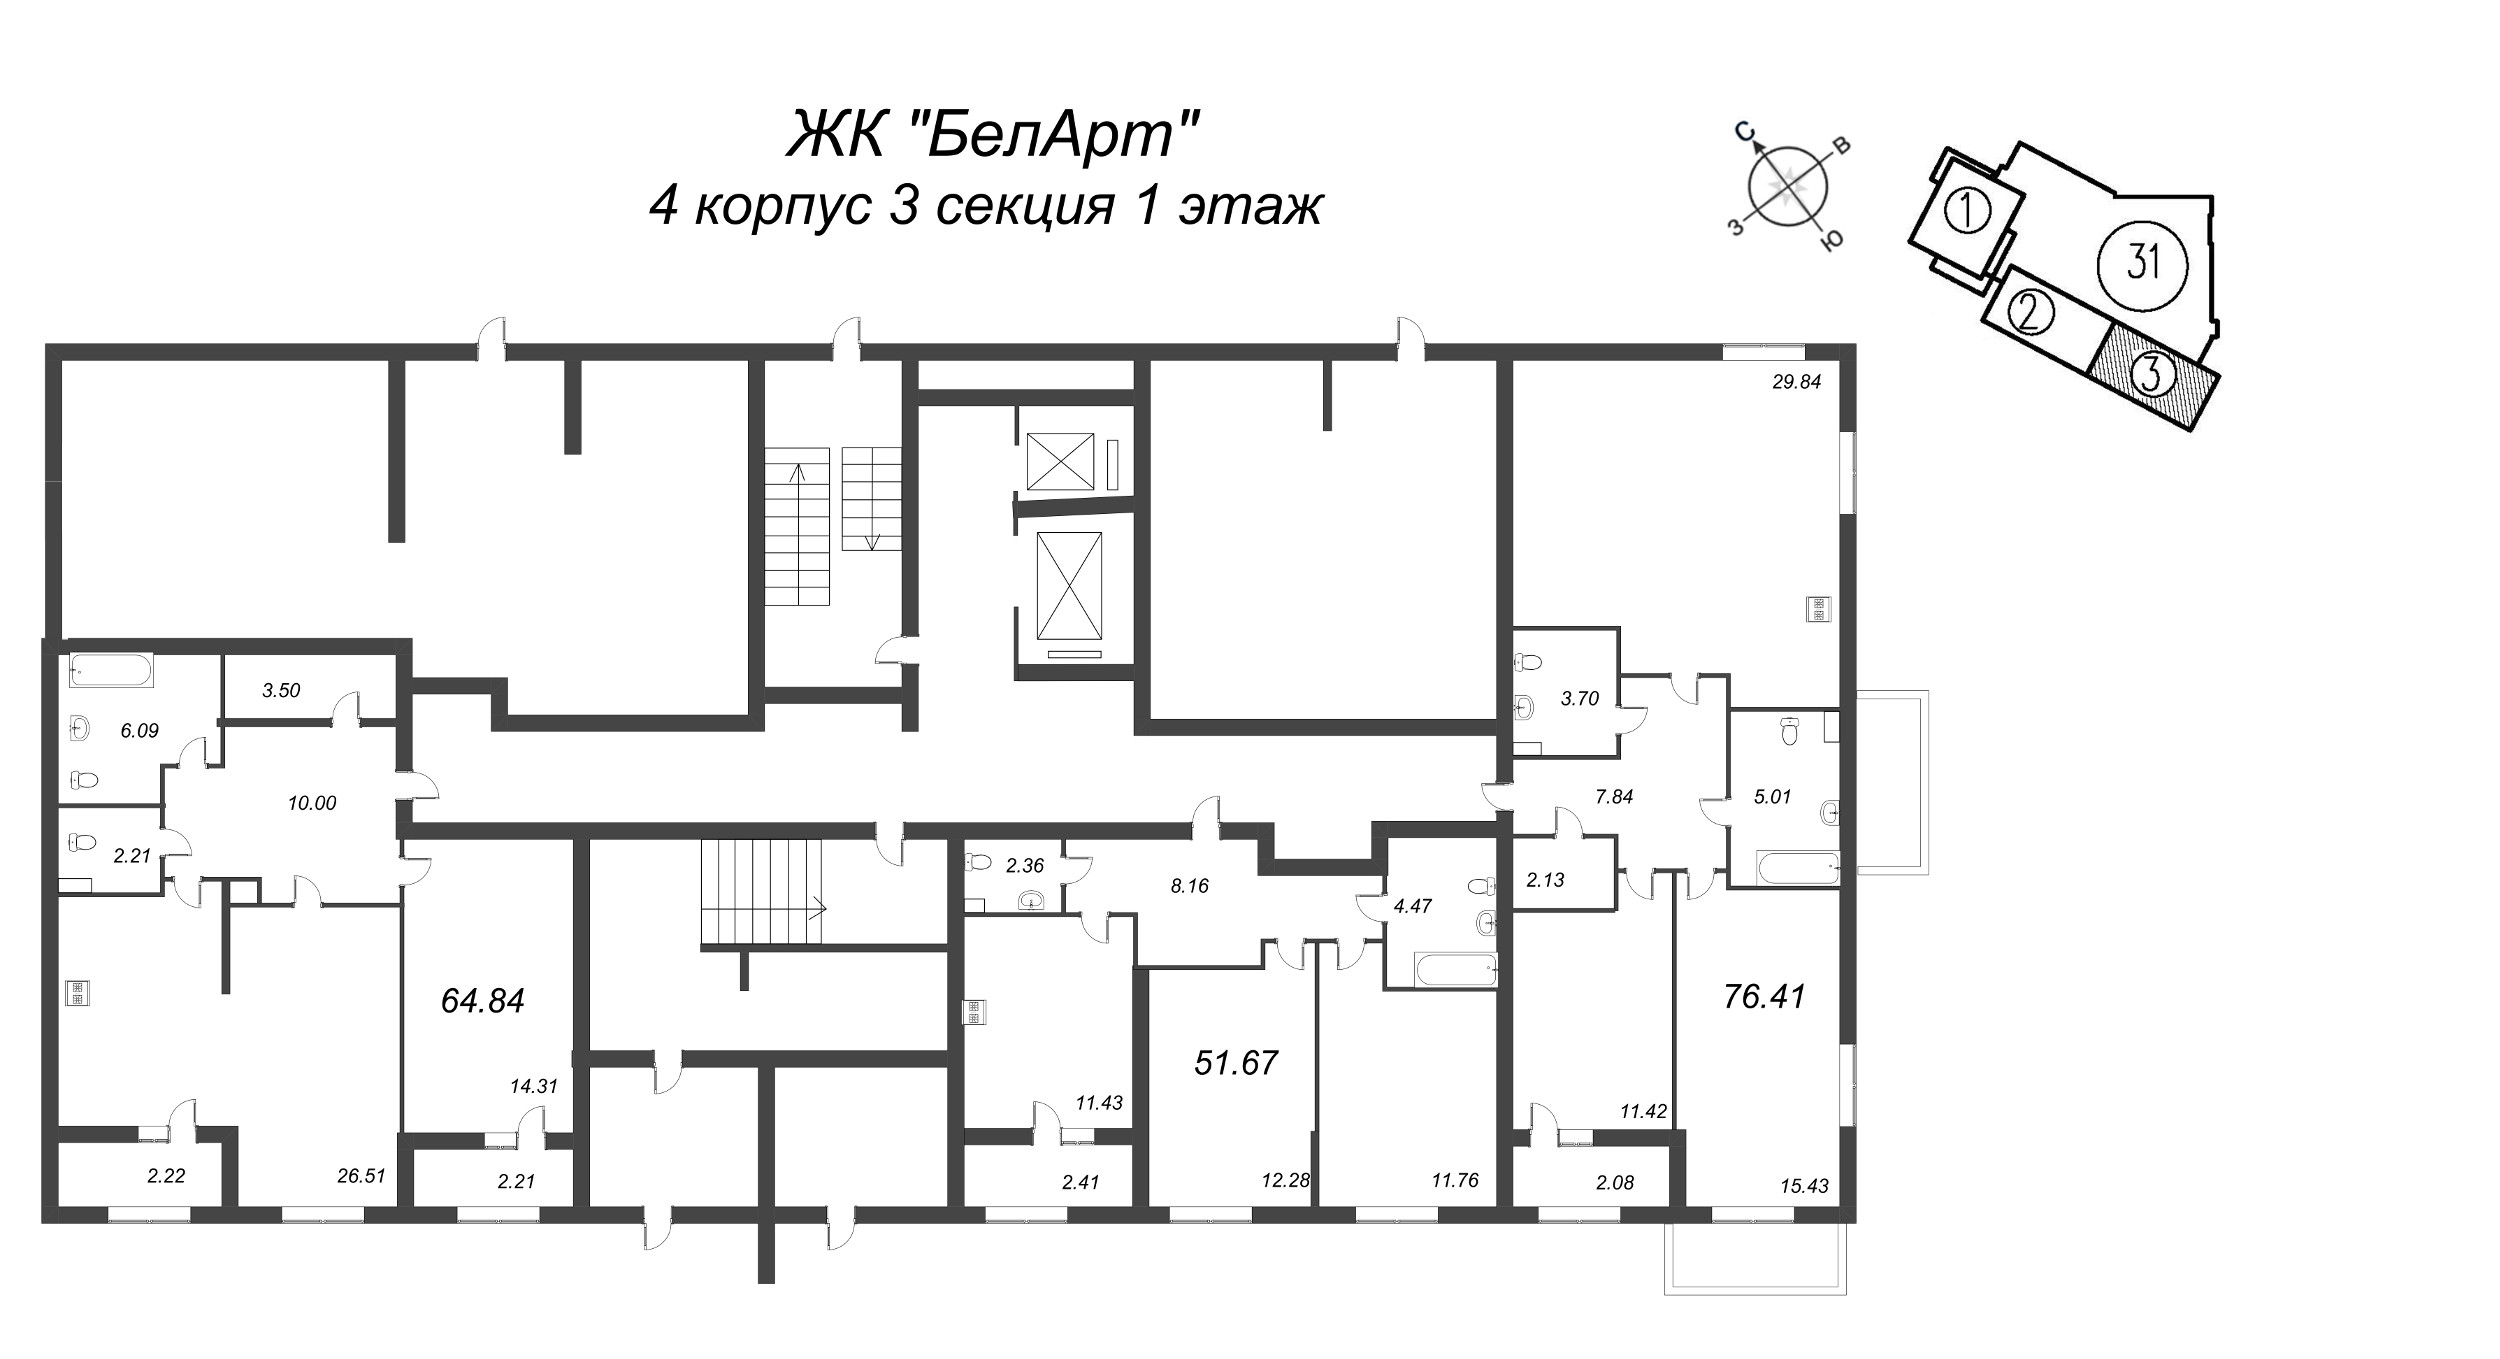 2-комнатная (Евро) квартира, 64.84 м² в ЖК "БелАрт" - планировка этажа